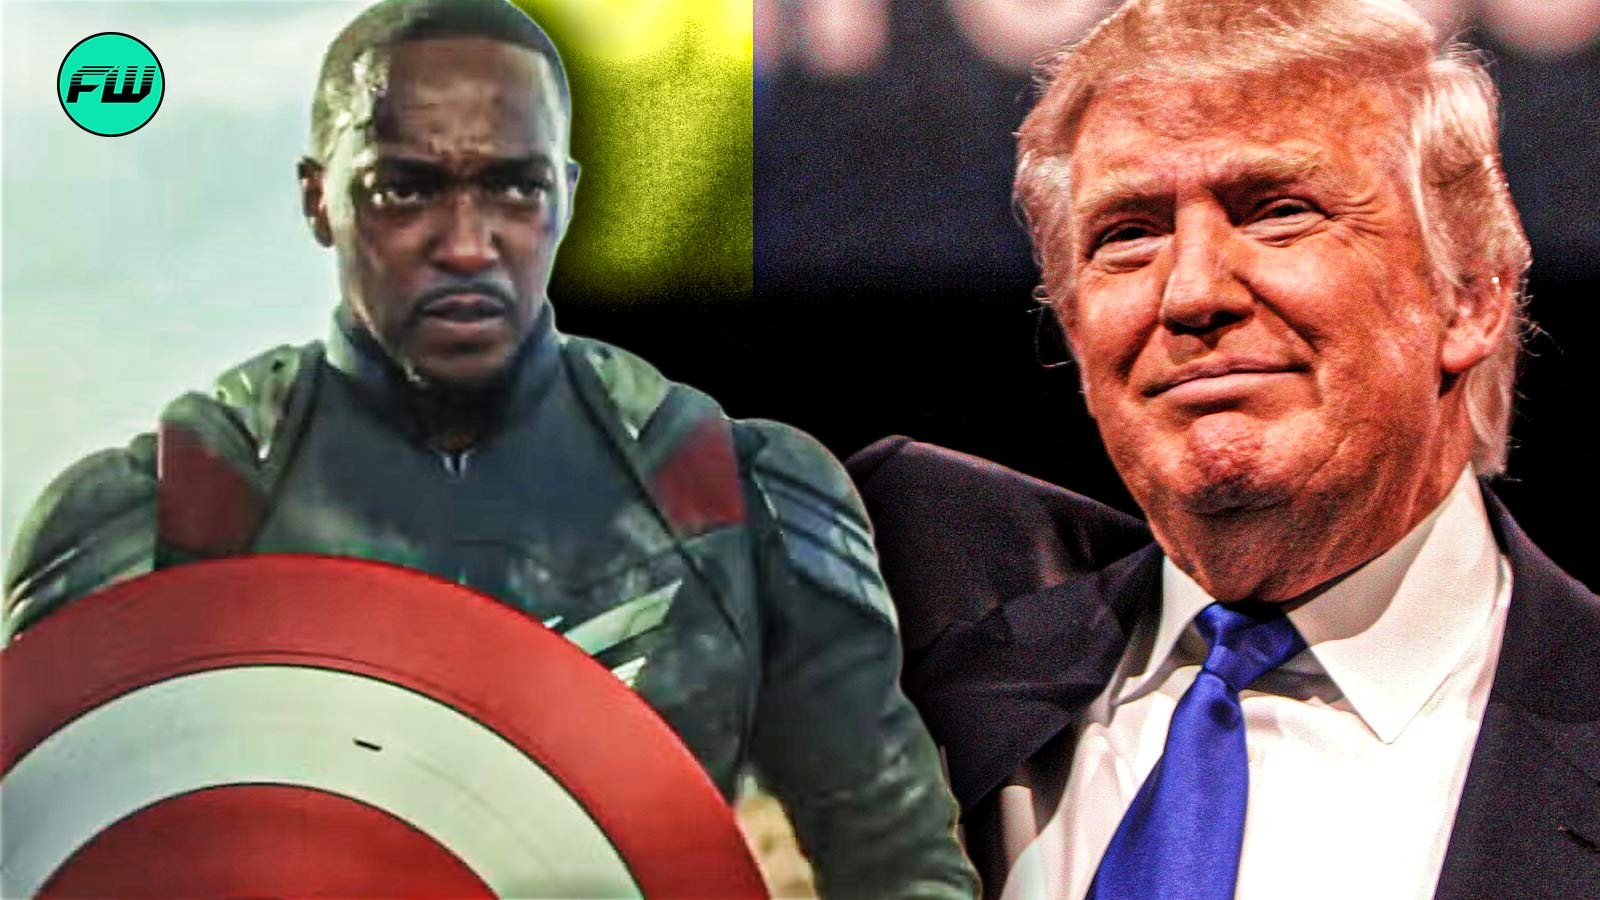 Captain America 4 and Donald Trump